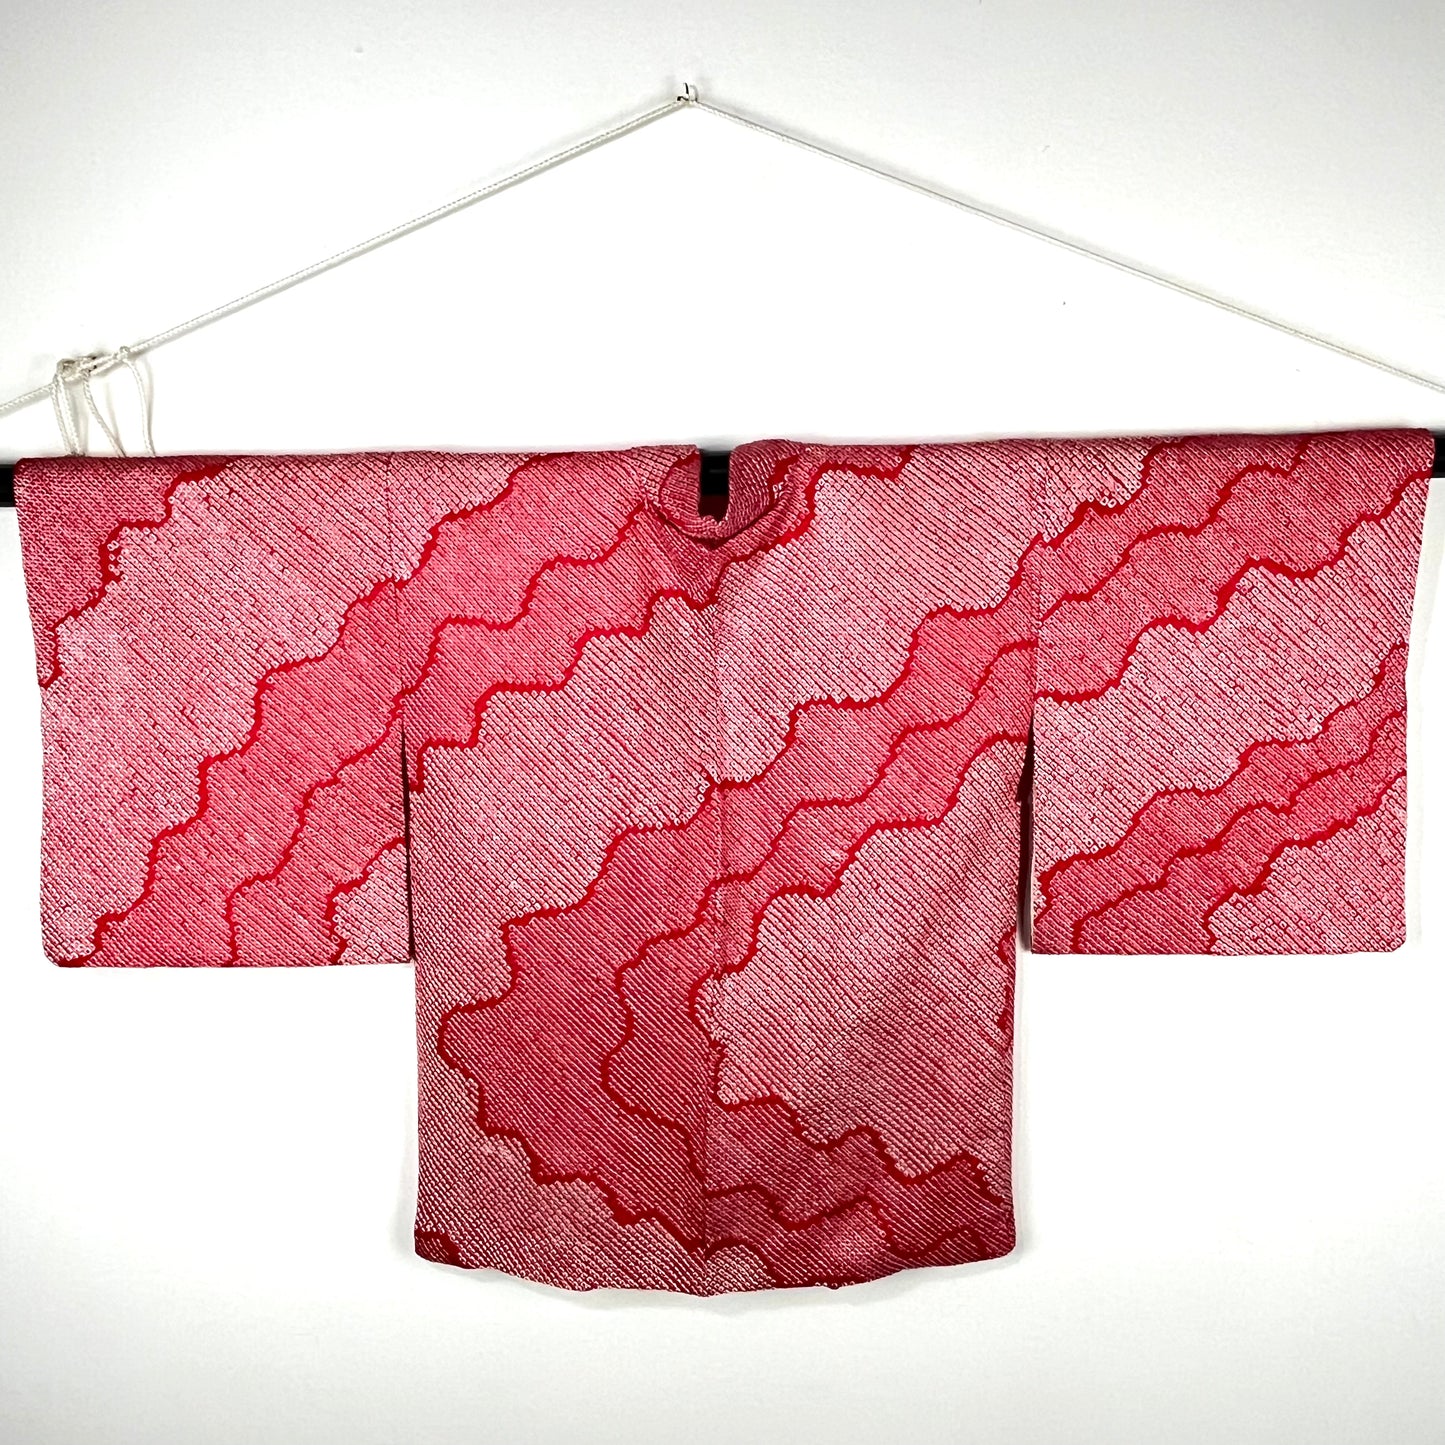 Copy of Vintage Japanese Silk Haori Coat in Shibori Tie-dye Bright Red Wavy Pattern 28"L